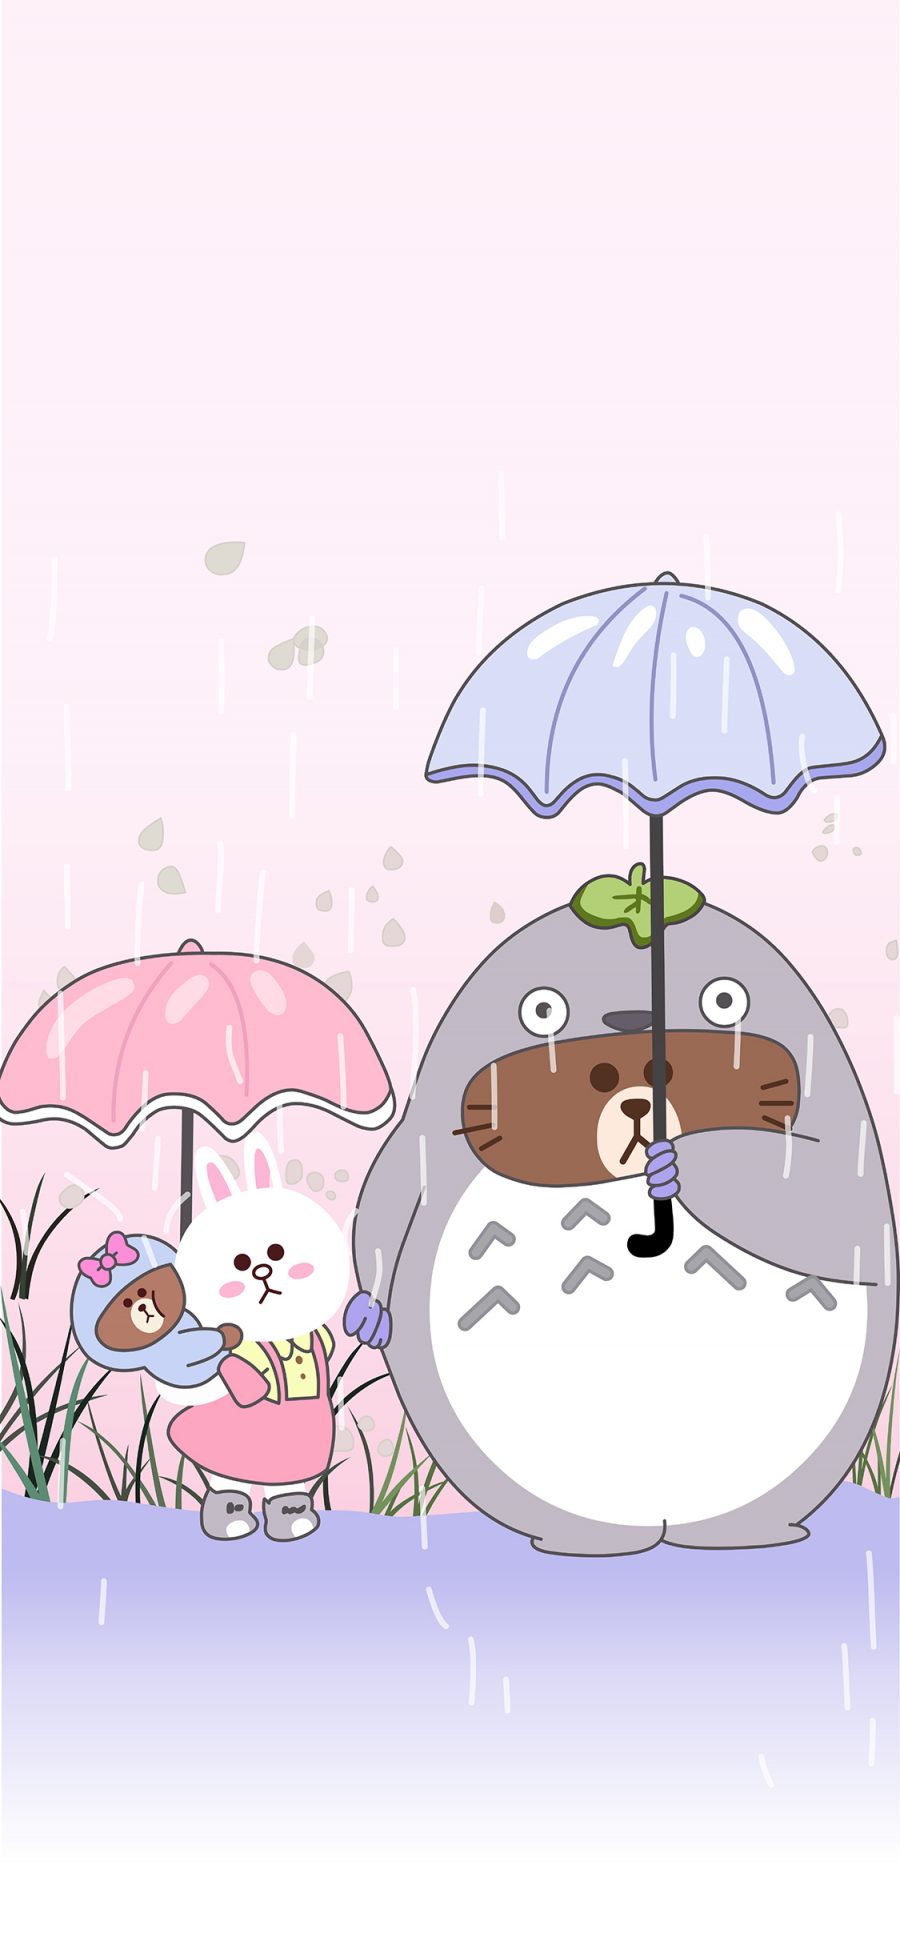 [2436×1125]line friends 龙猫 布朗熊 可妮兔 雨 动画 卡通 可爱 苹果手机动漫壁纸图片